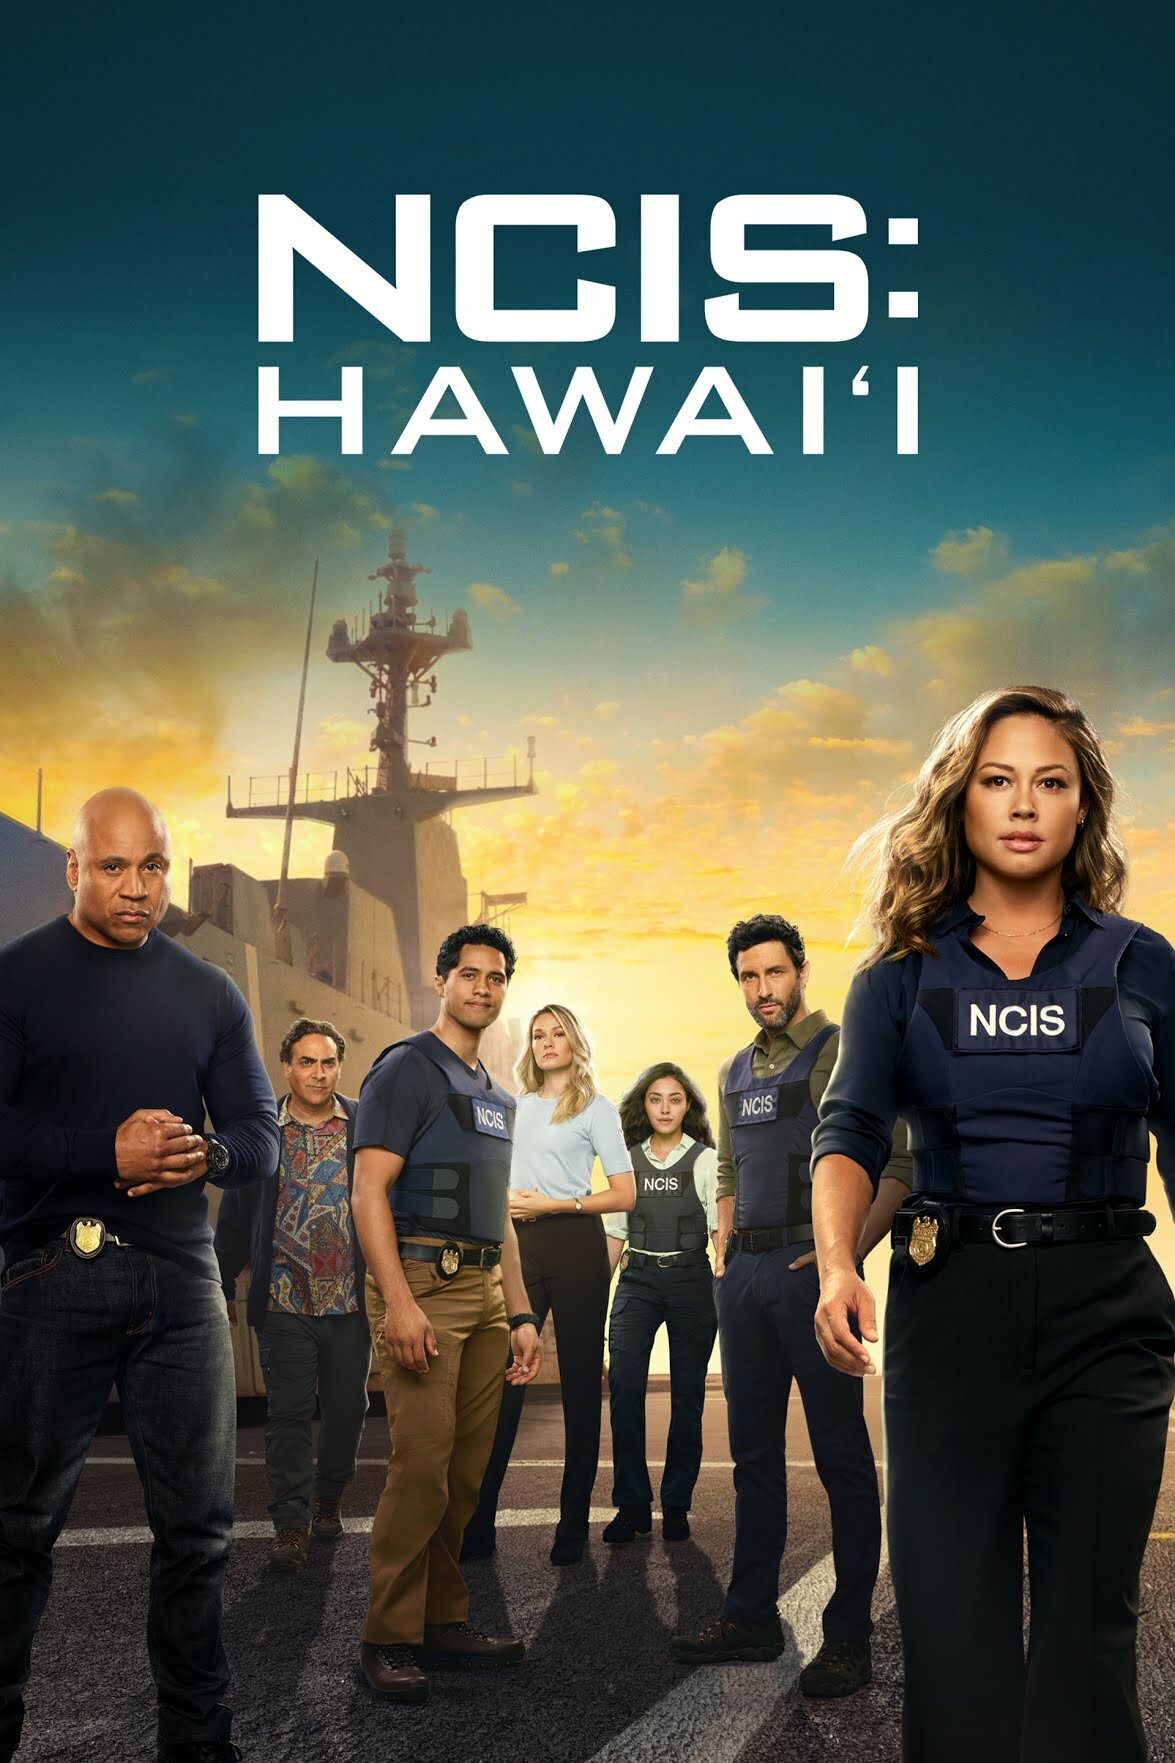 NCIS Hawaii S03E03 License to Thrill 1080p AMZN WEB-DL DDP5 1 H 264-NTb